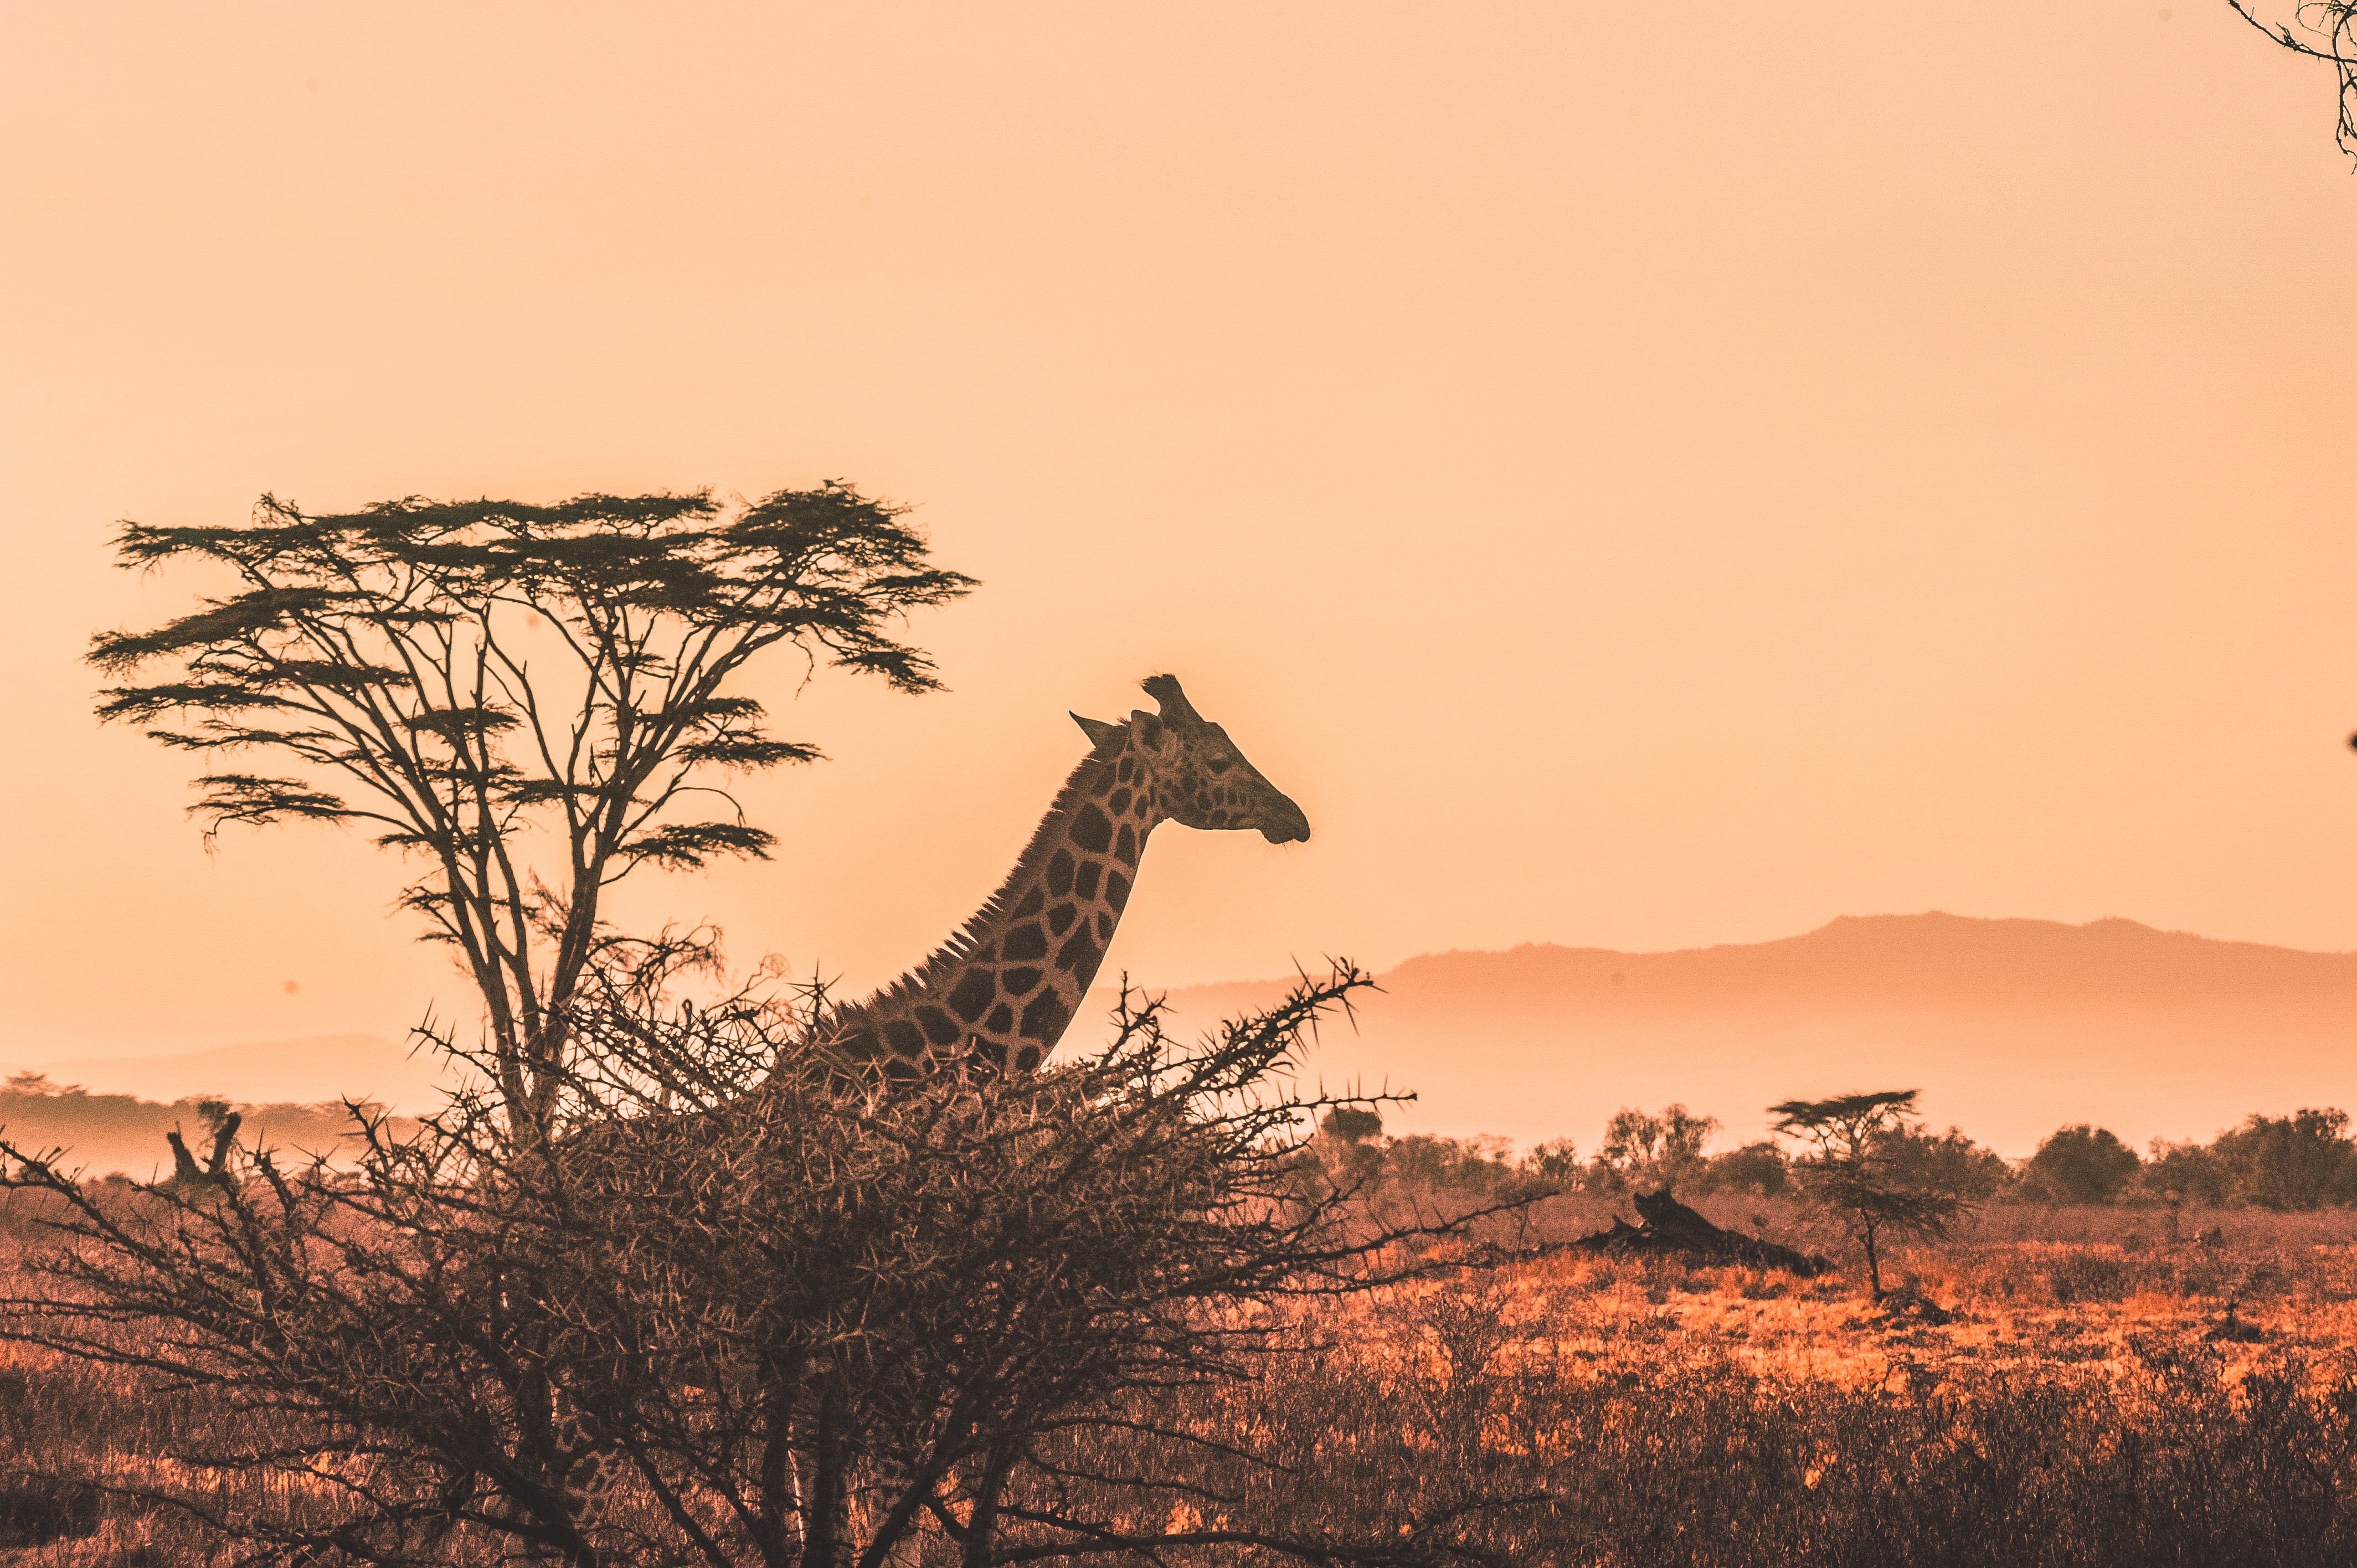 Giraffe in the wild photo